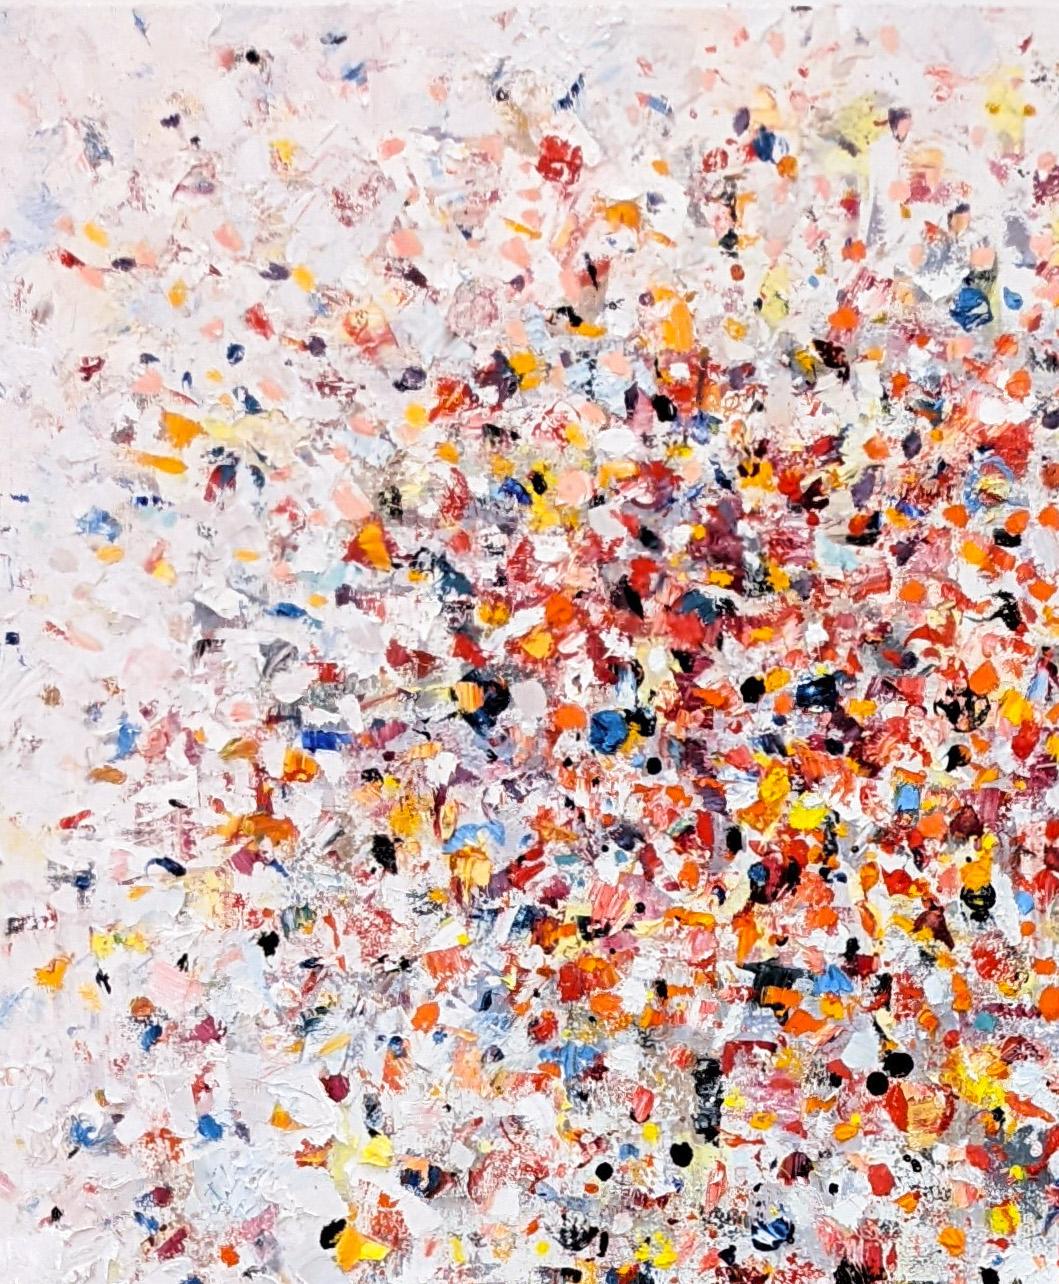 Red Bang : contemporary abstract artwork - Painting by David Michael Slonim